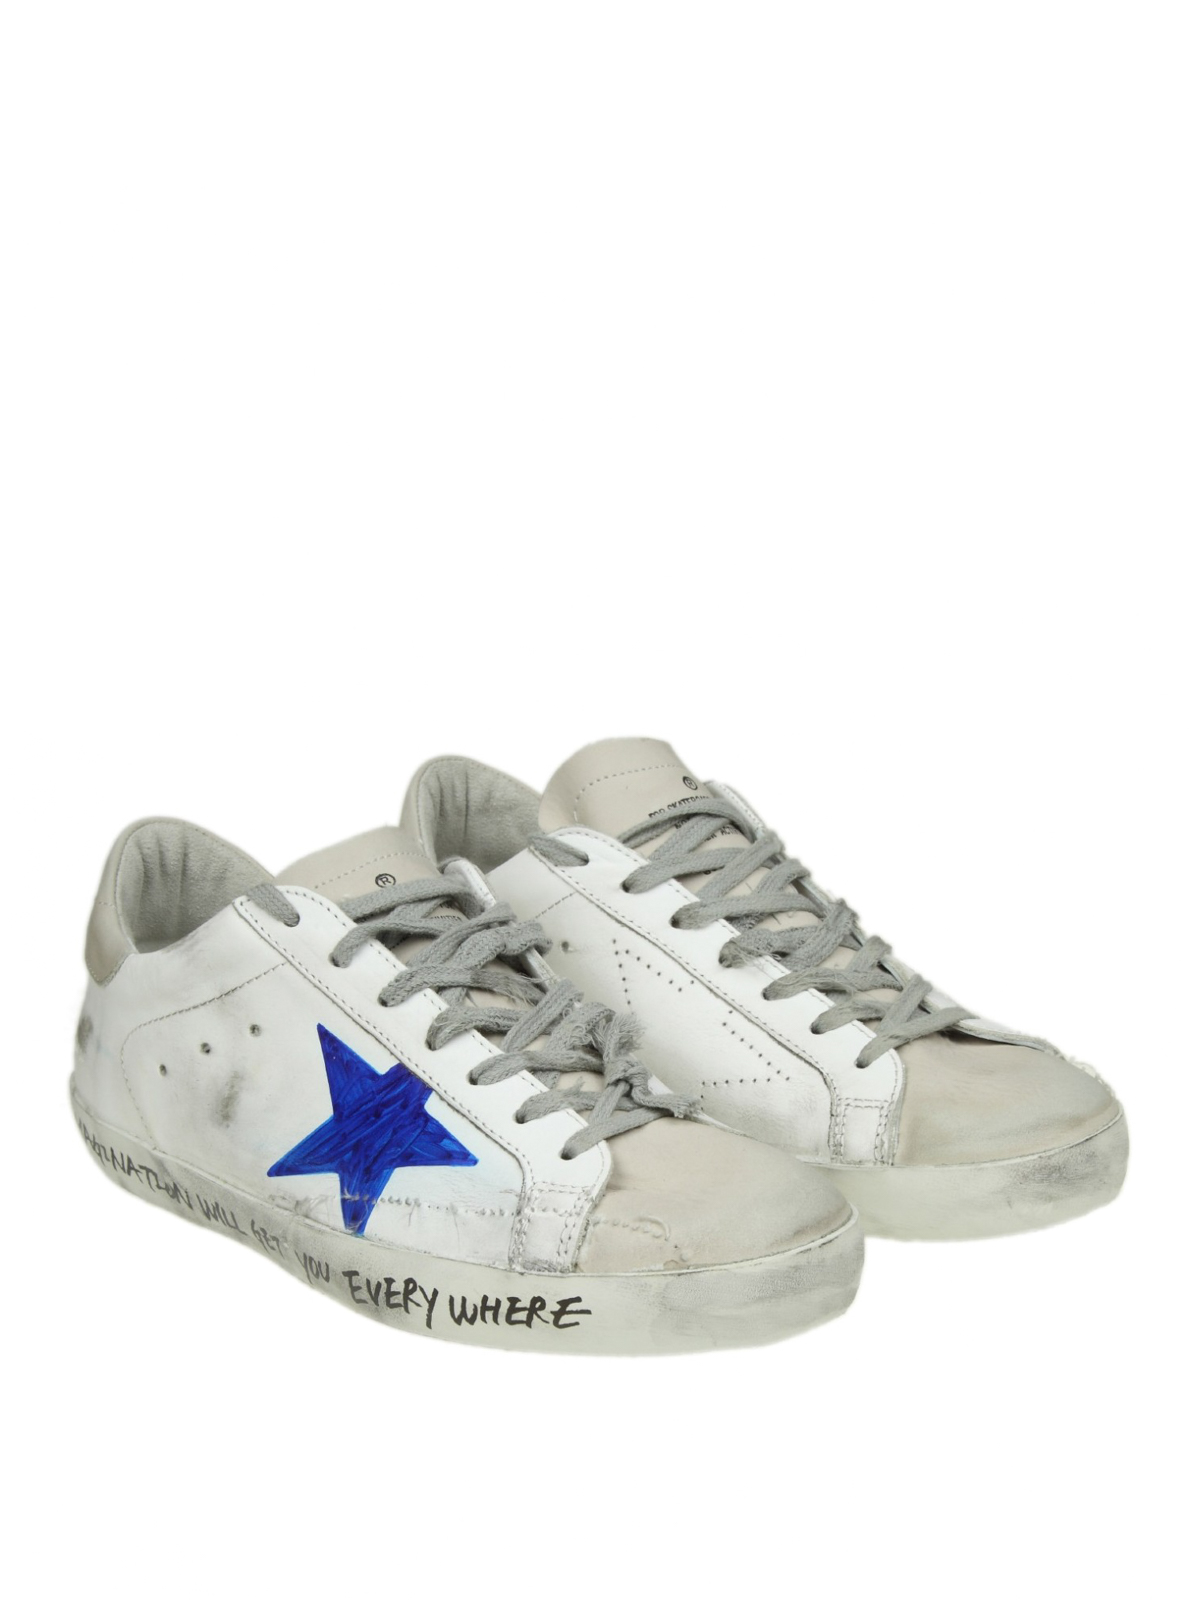 star tennis shoes